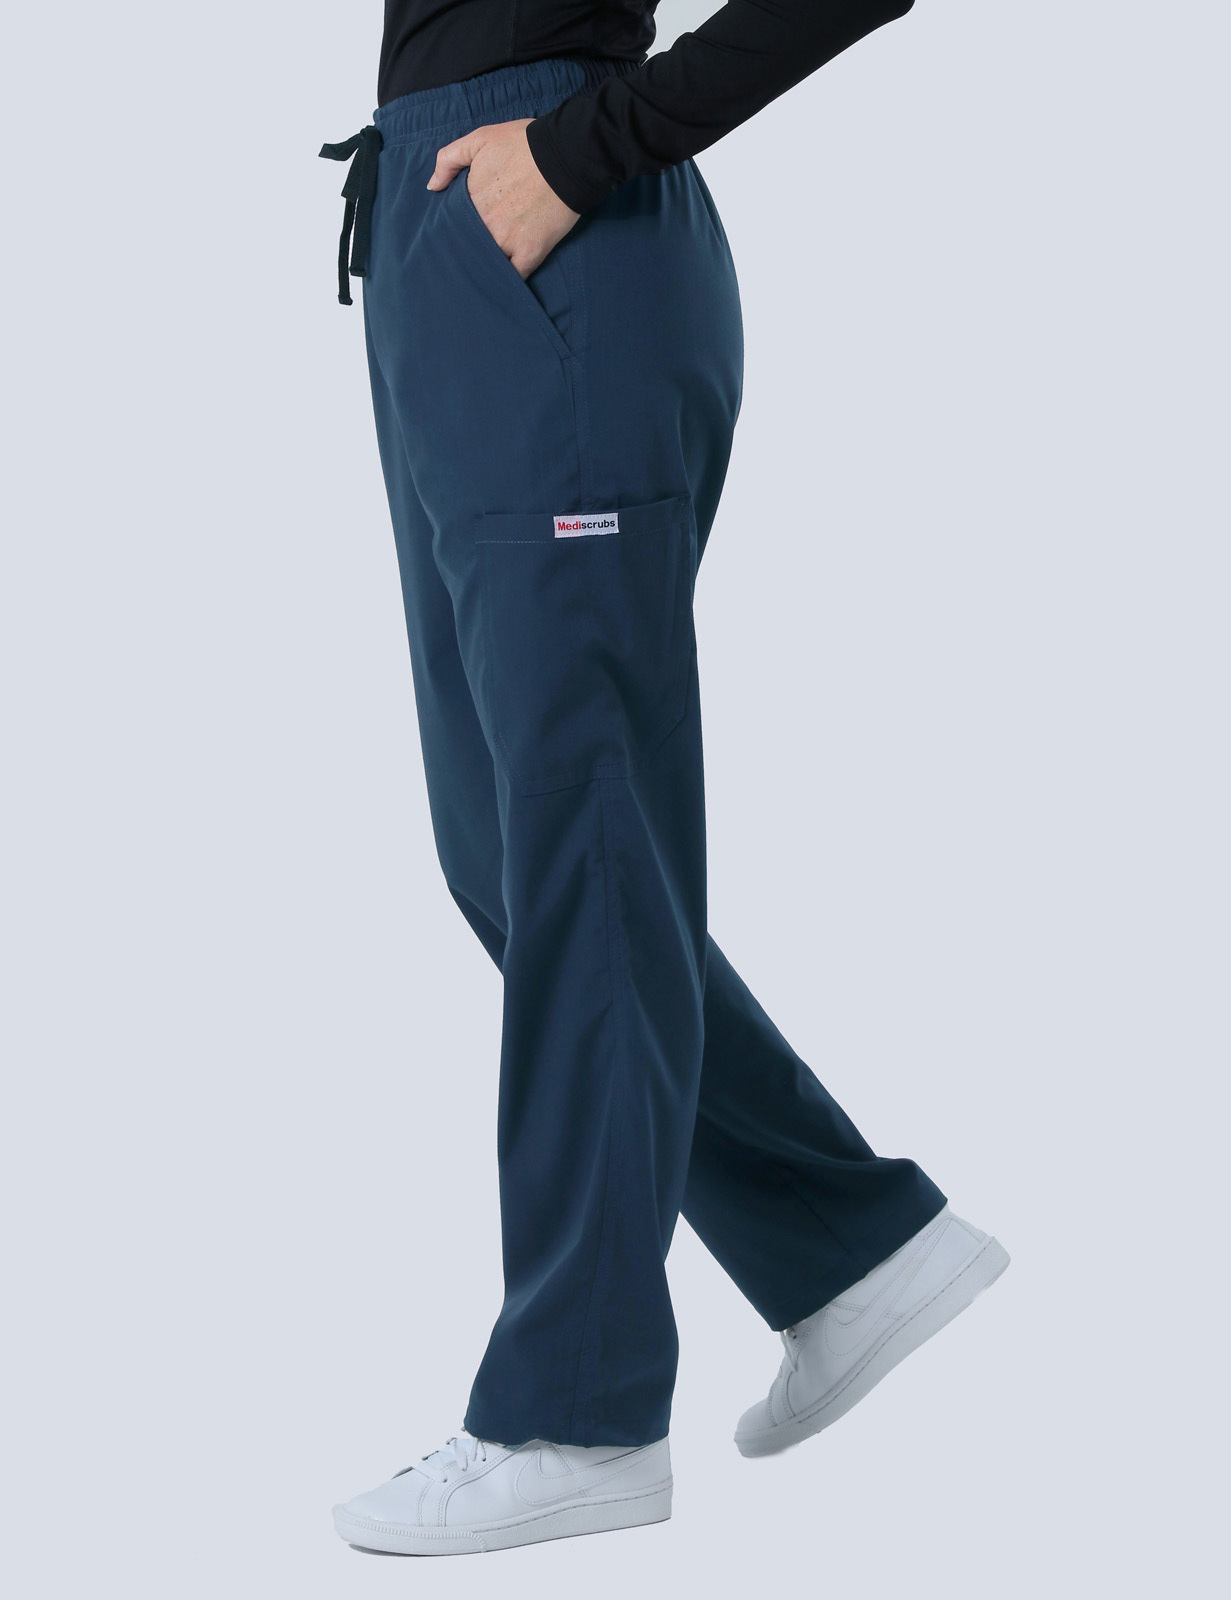 Women's Cargo Performance Pants - Navy - X Large